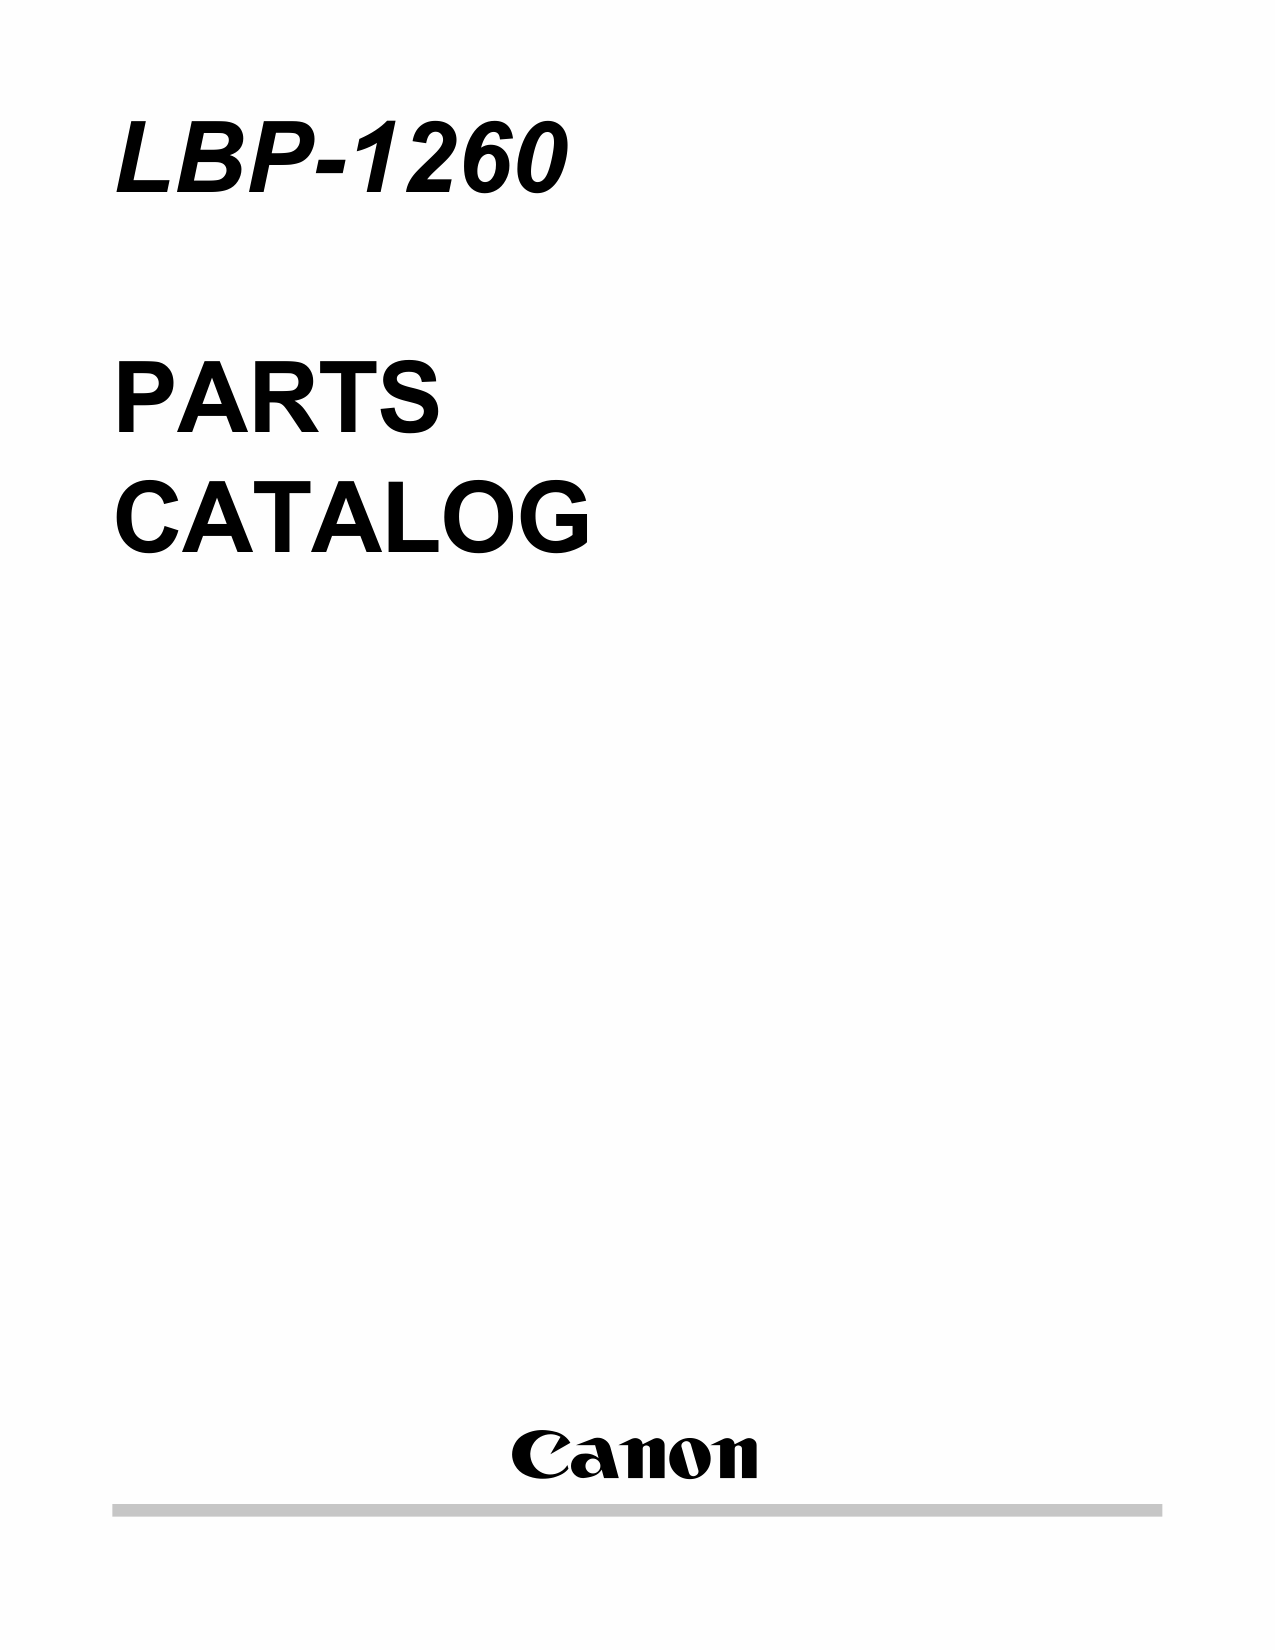 Canon imageCLASS LBP-1260 Parts Catalog Manual-1